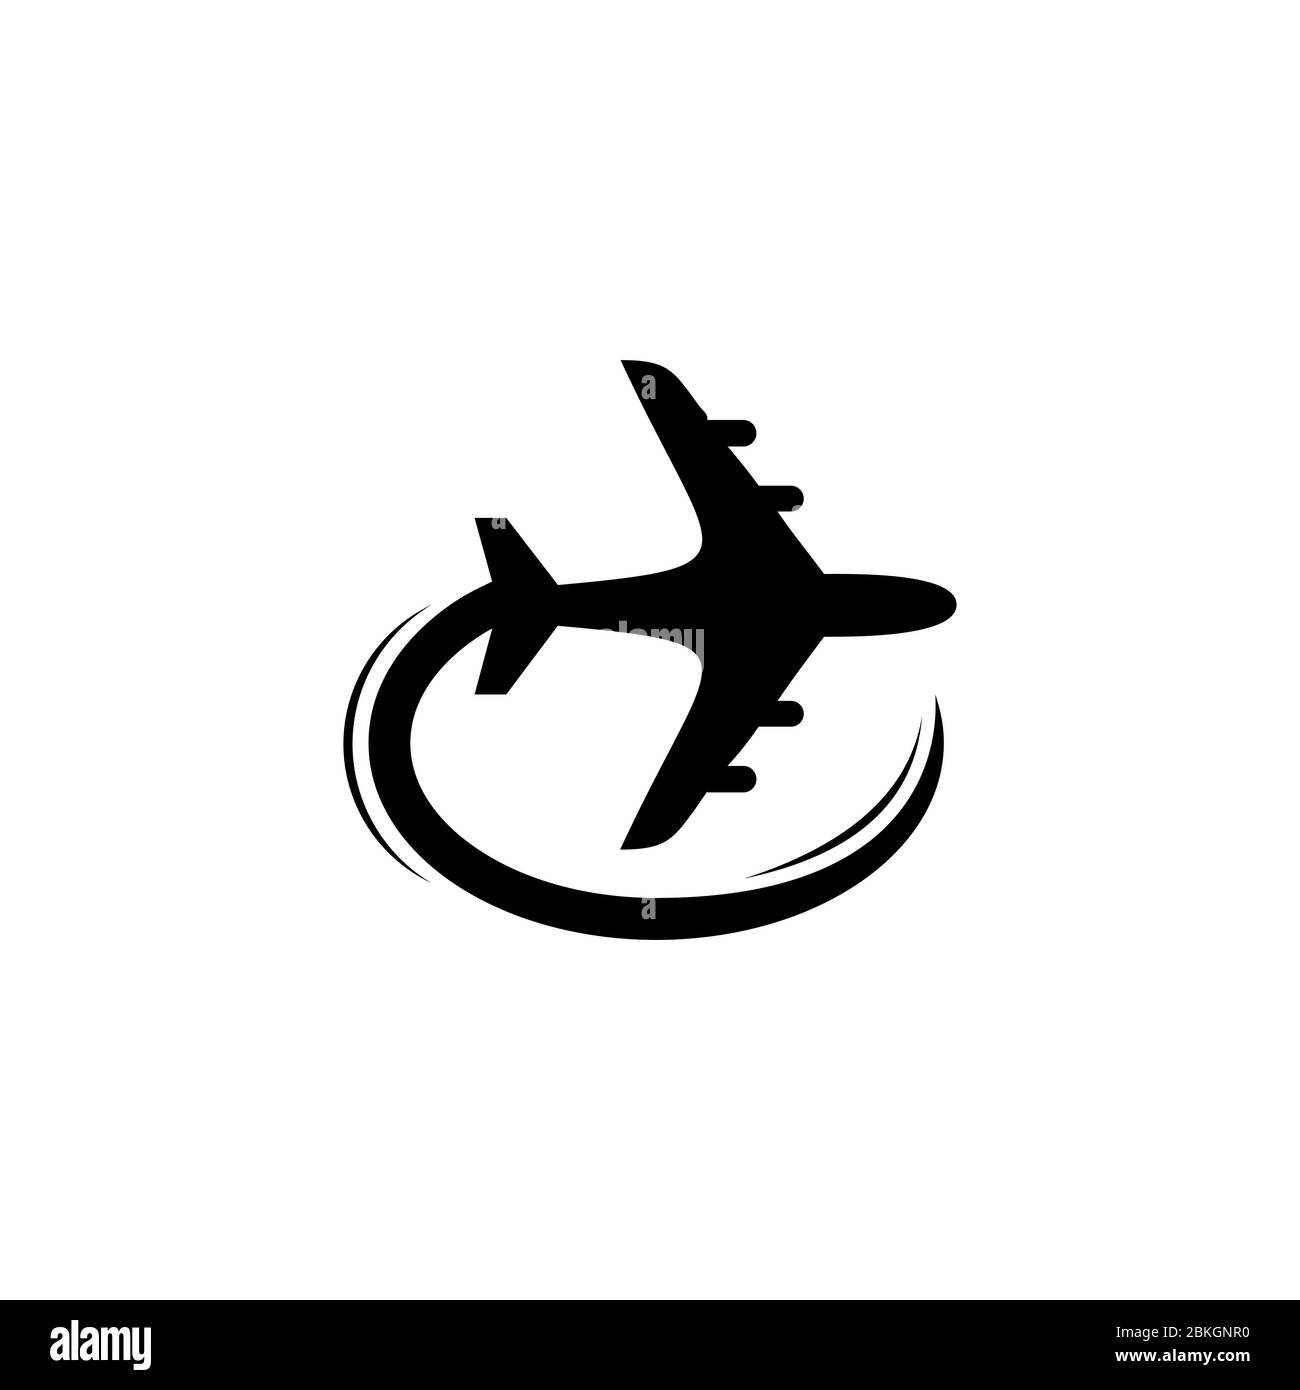 Travel logo Black and White Stock Photos & Images - Alamy